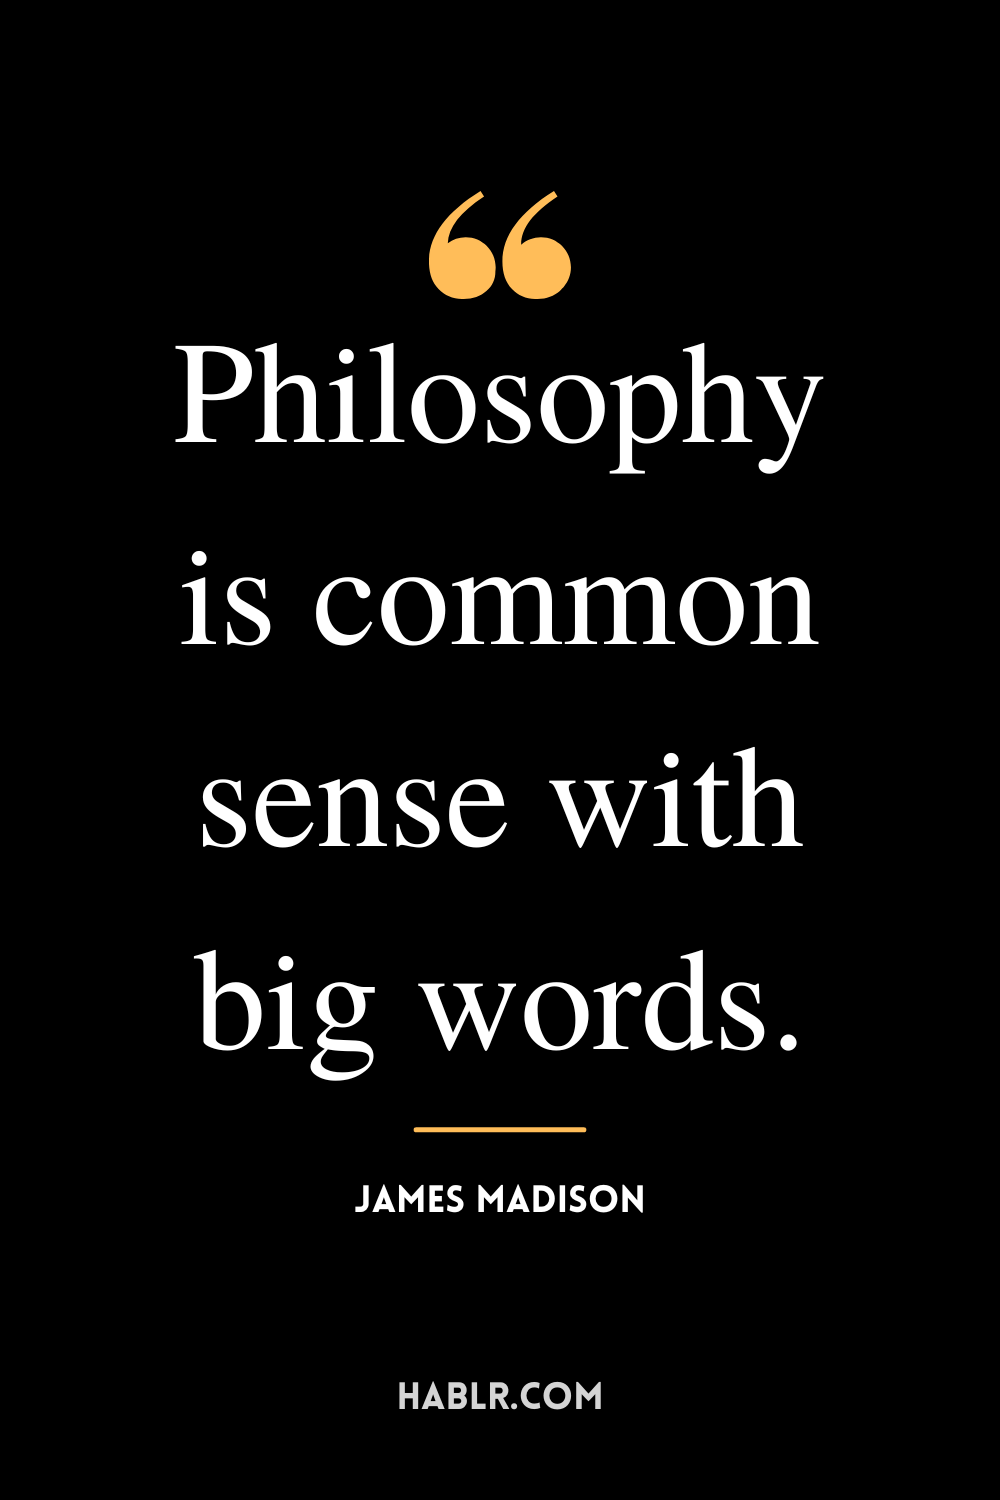 “Philosophy is common sense with big words.” -James Madison